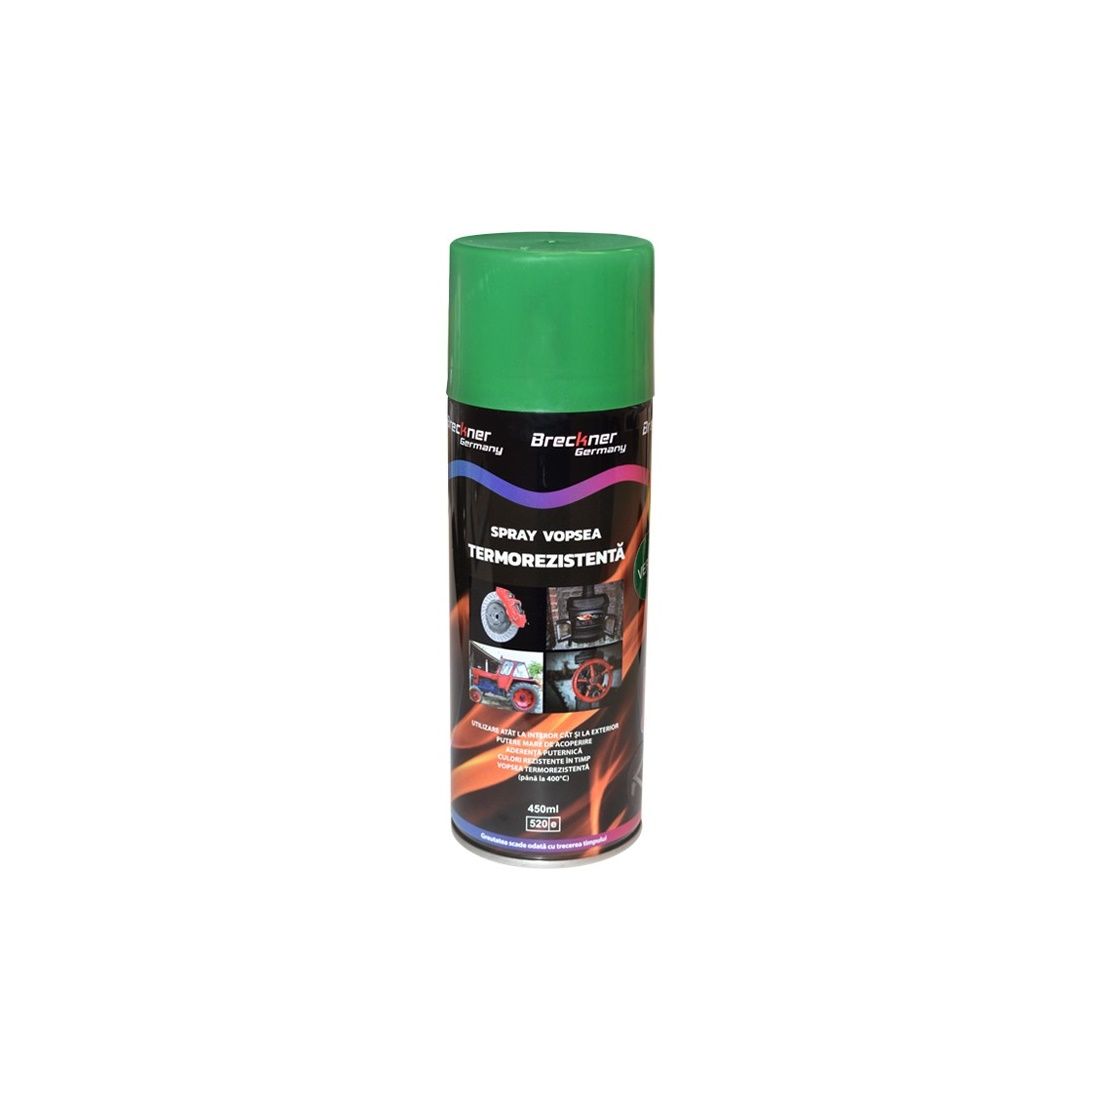 Spray vopsea VERDE rezistent termic pentru etriere 450ml. Breckner